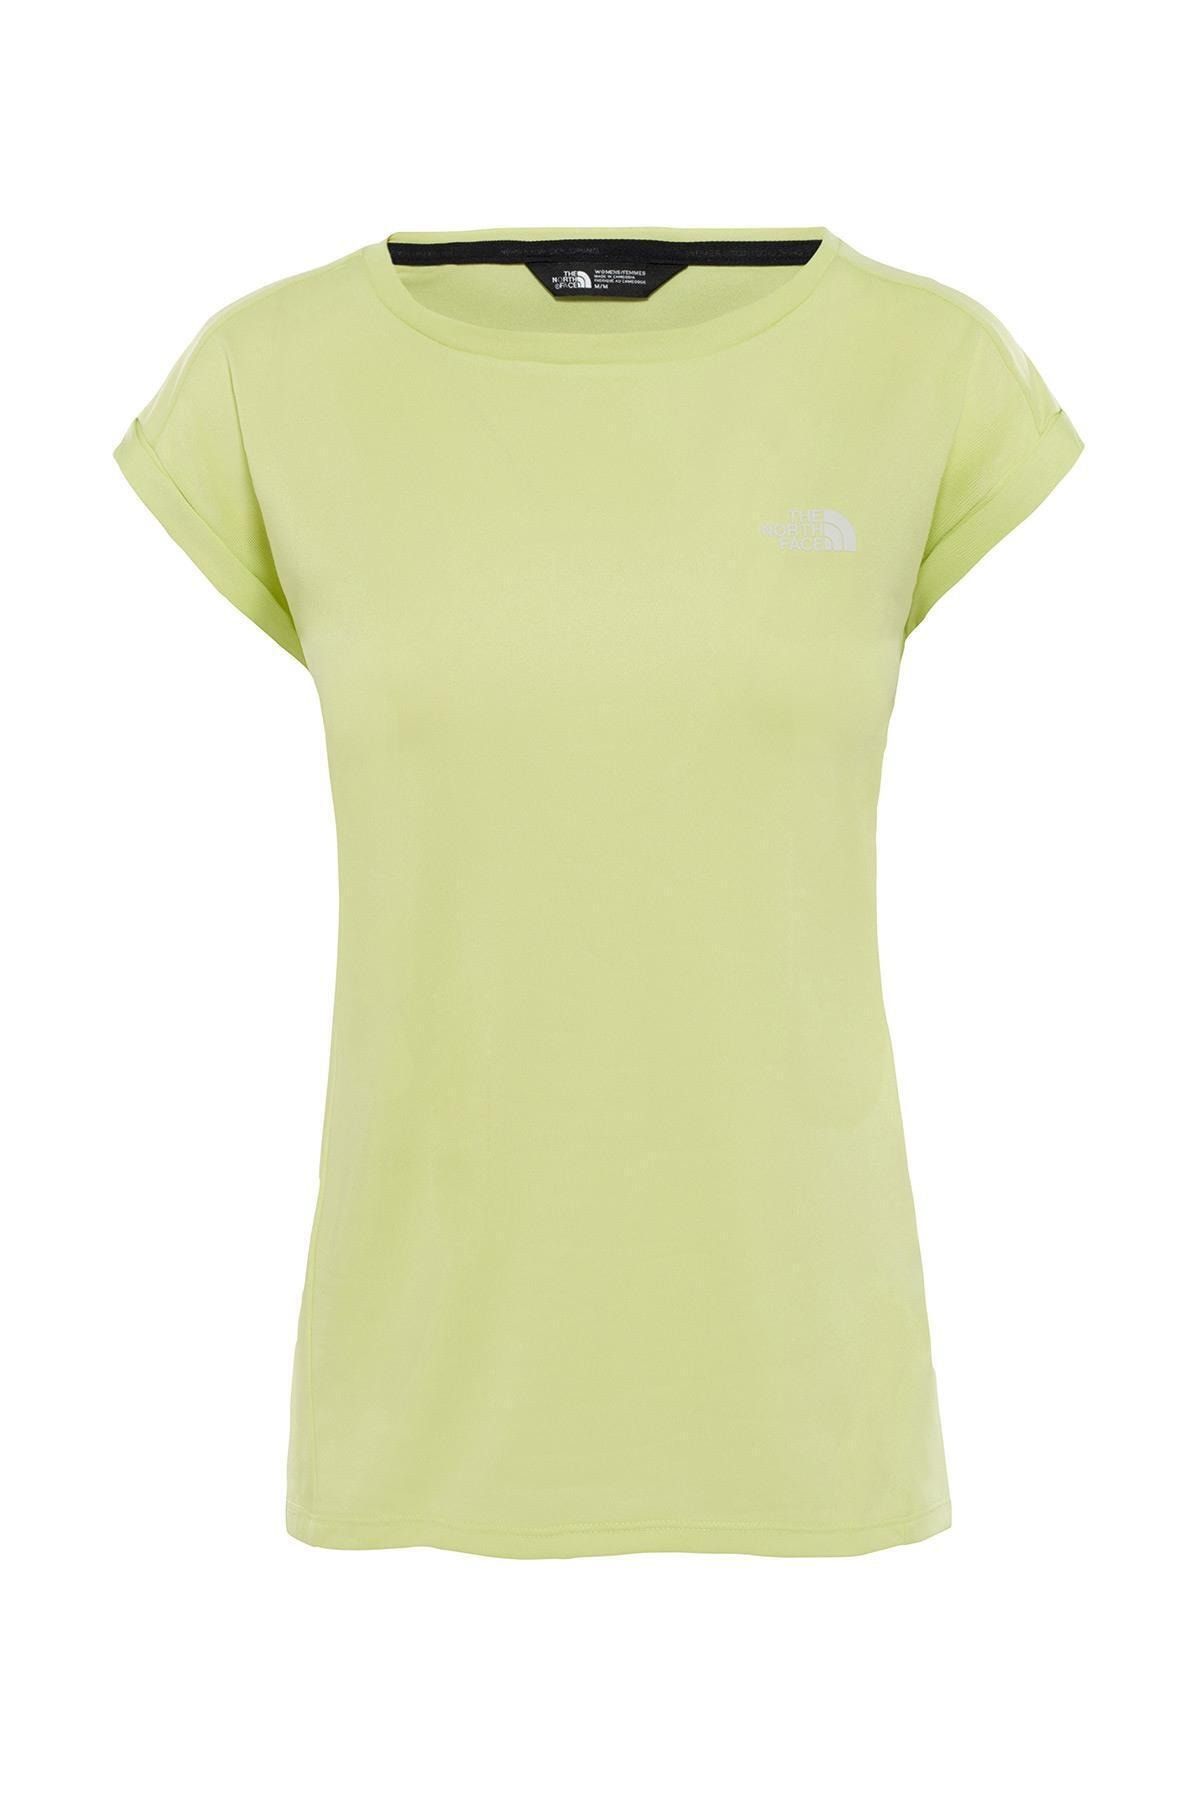 The North Face W TANKEN Yeşil Kadın T-Shirt 100523685